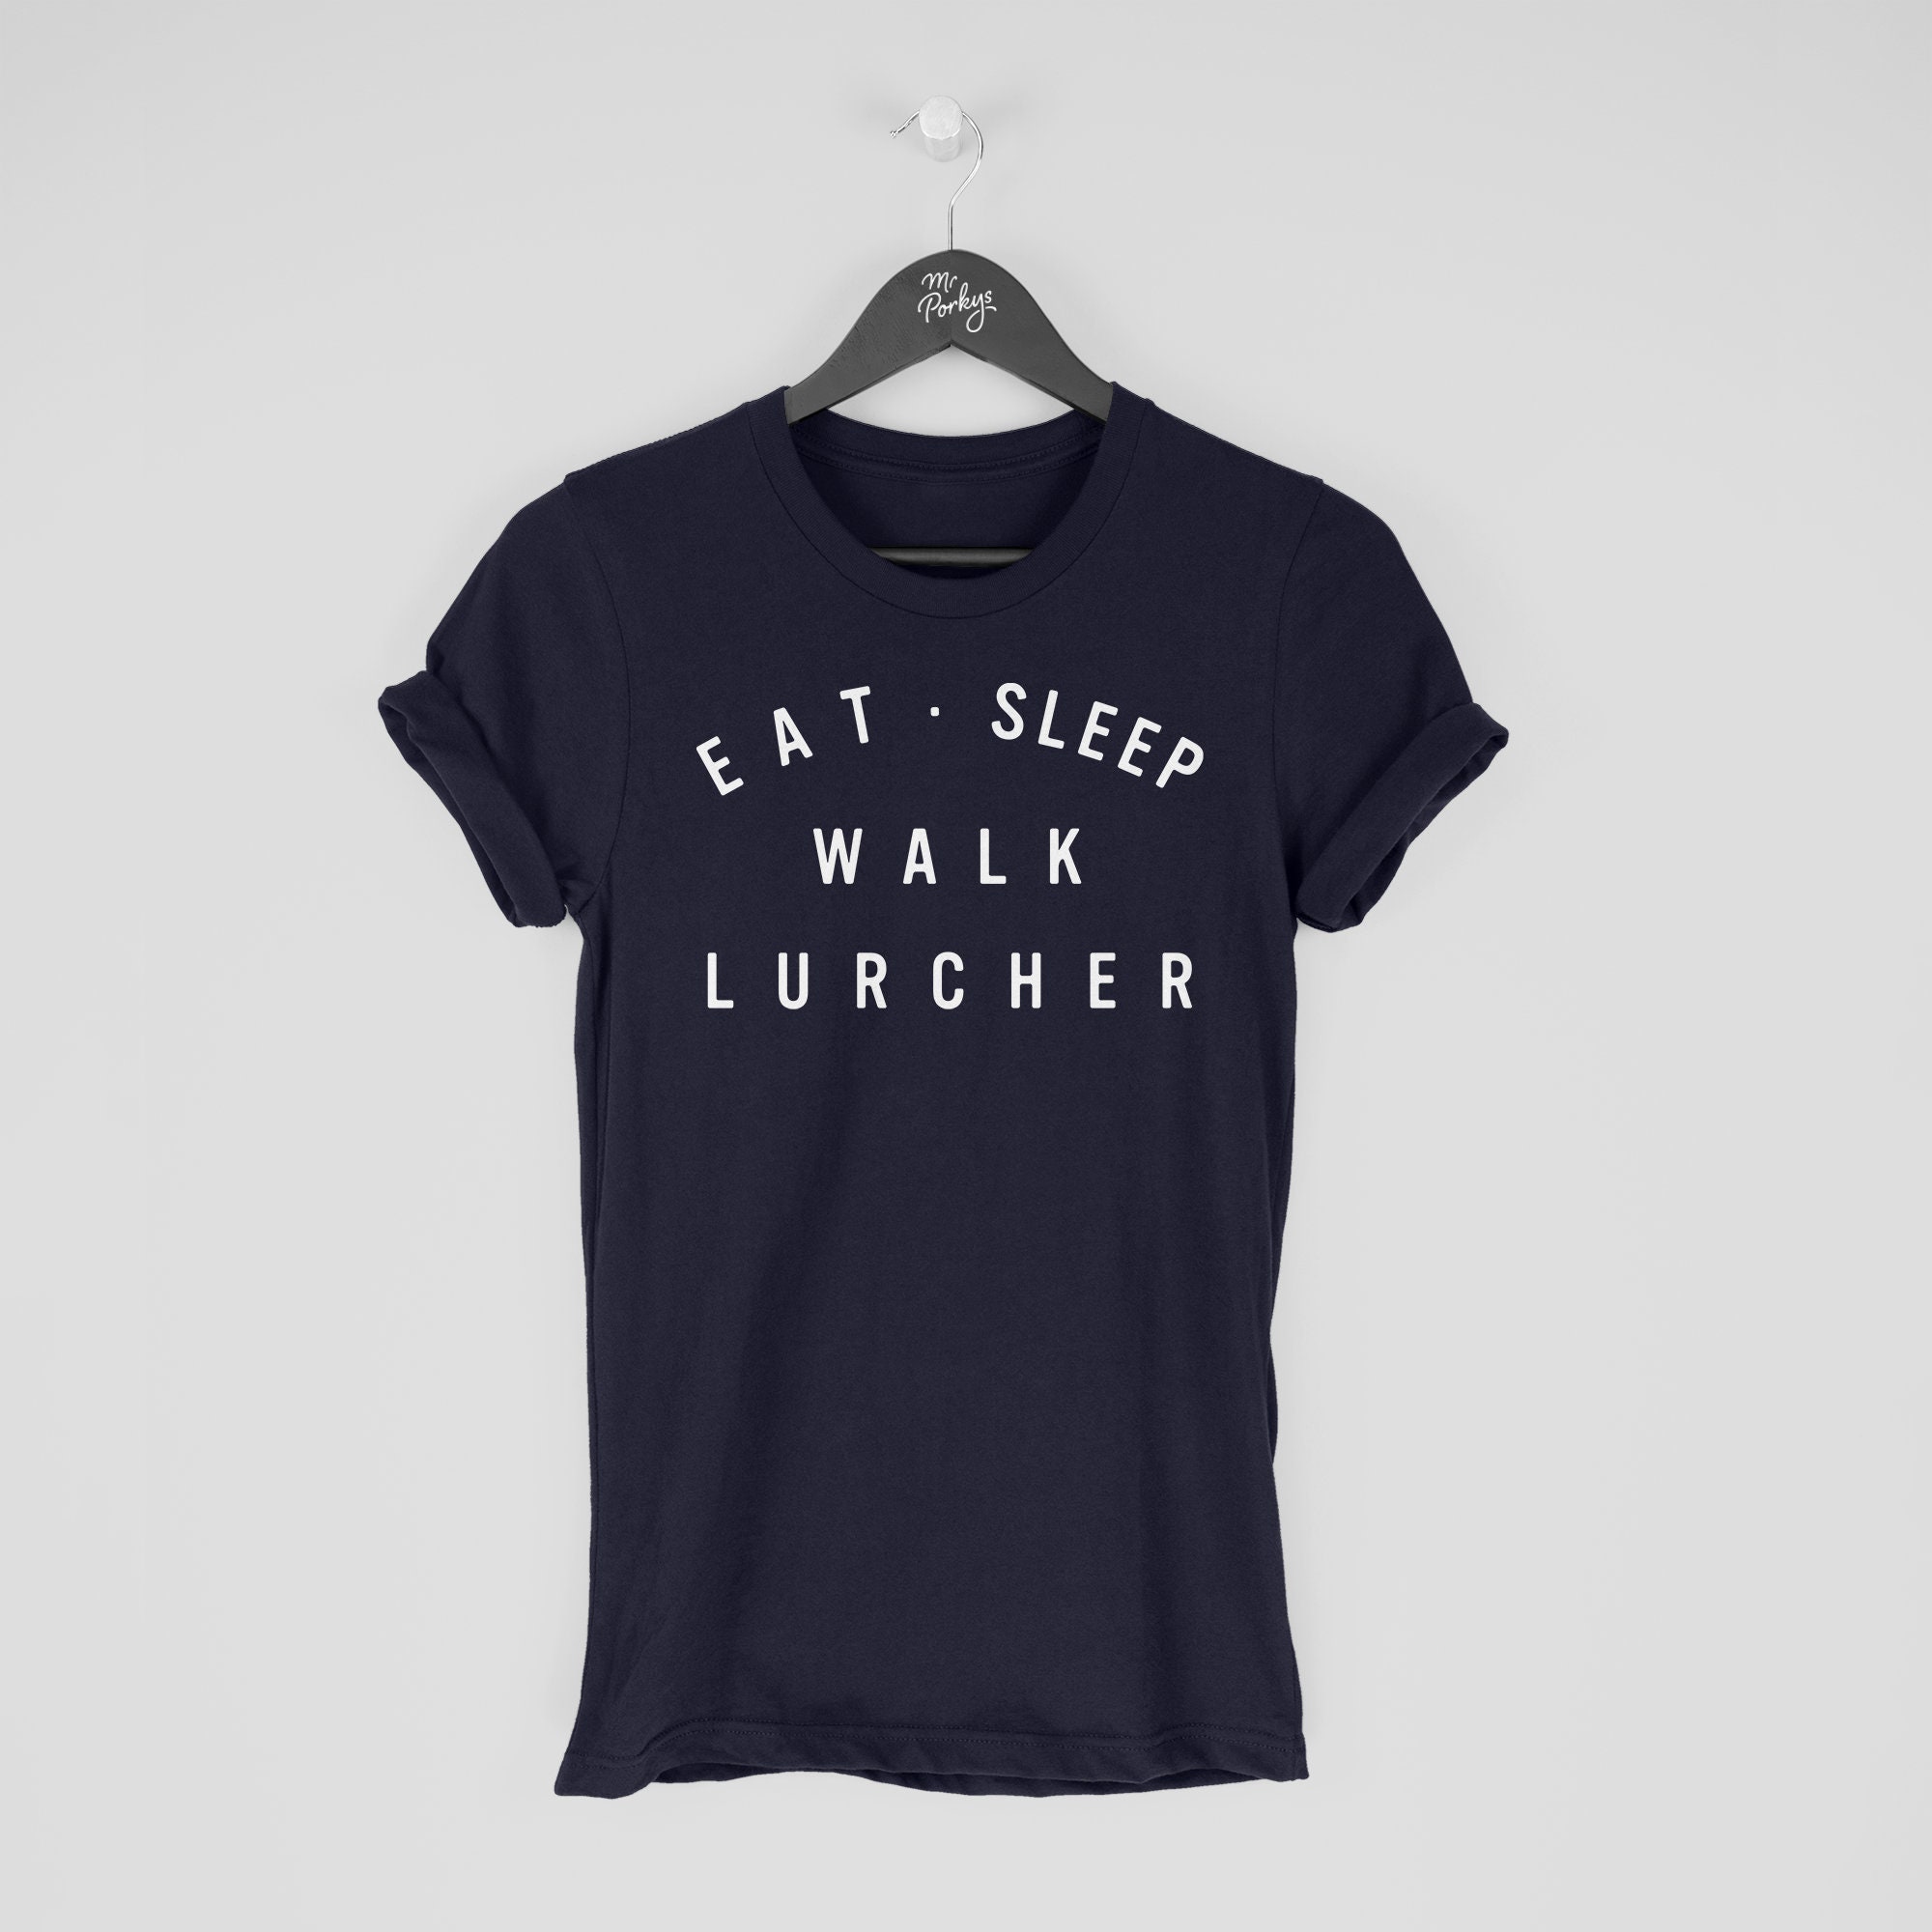 Lurcher Mom/Dad Tshirt Lurcher Shirt Eat Sleep Walk Lurcher Tshirt Lurcher gift Lurcher Dog lover shirt